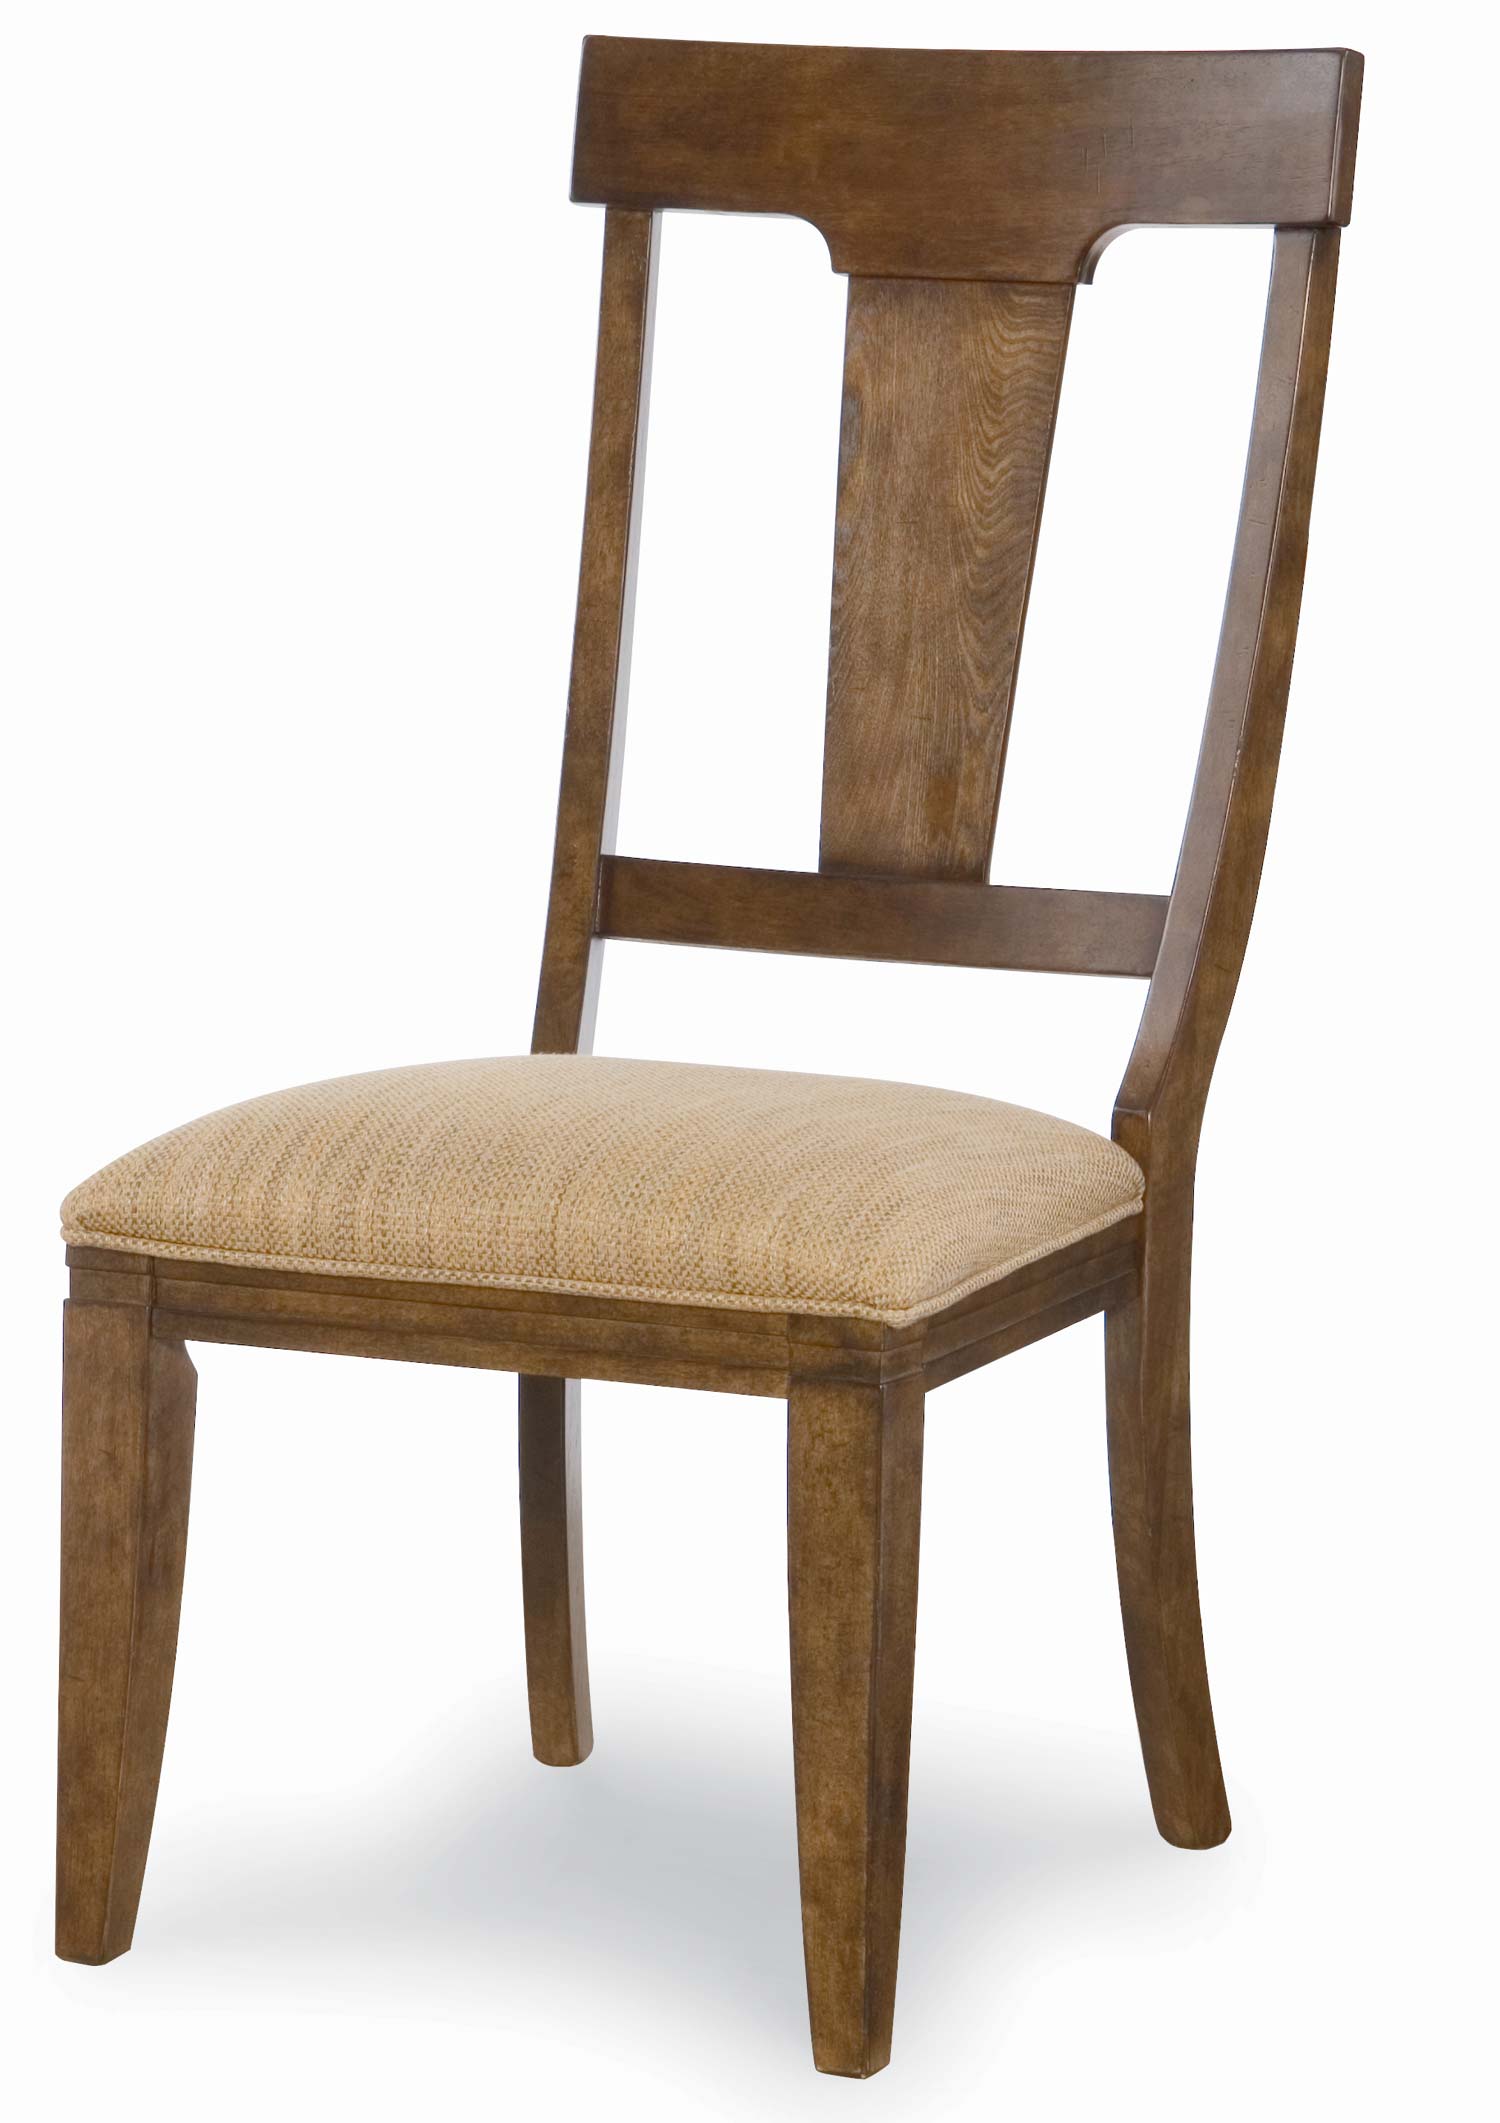 Legacy Classic River Run Splat Back Side Chair - Bourbon